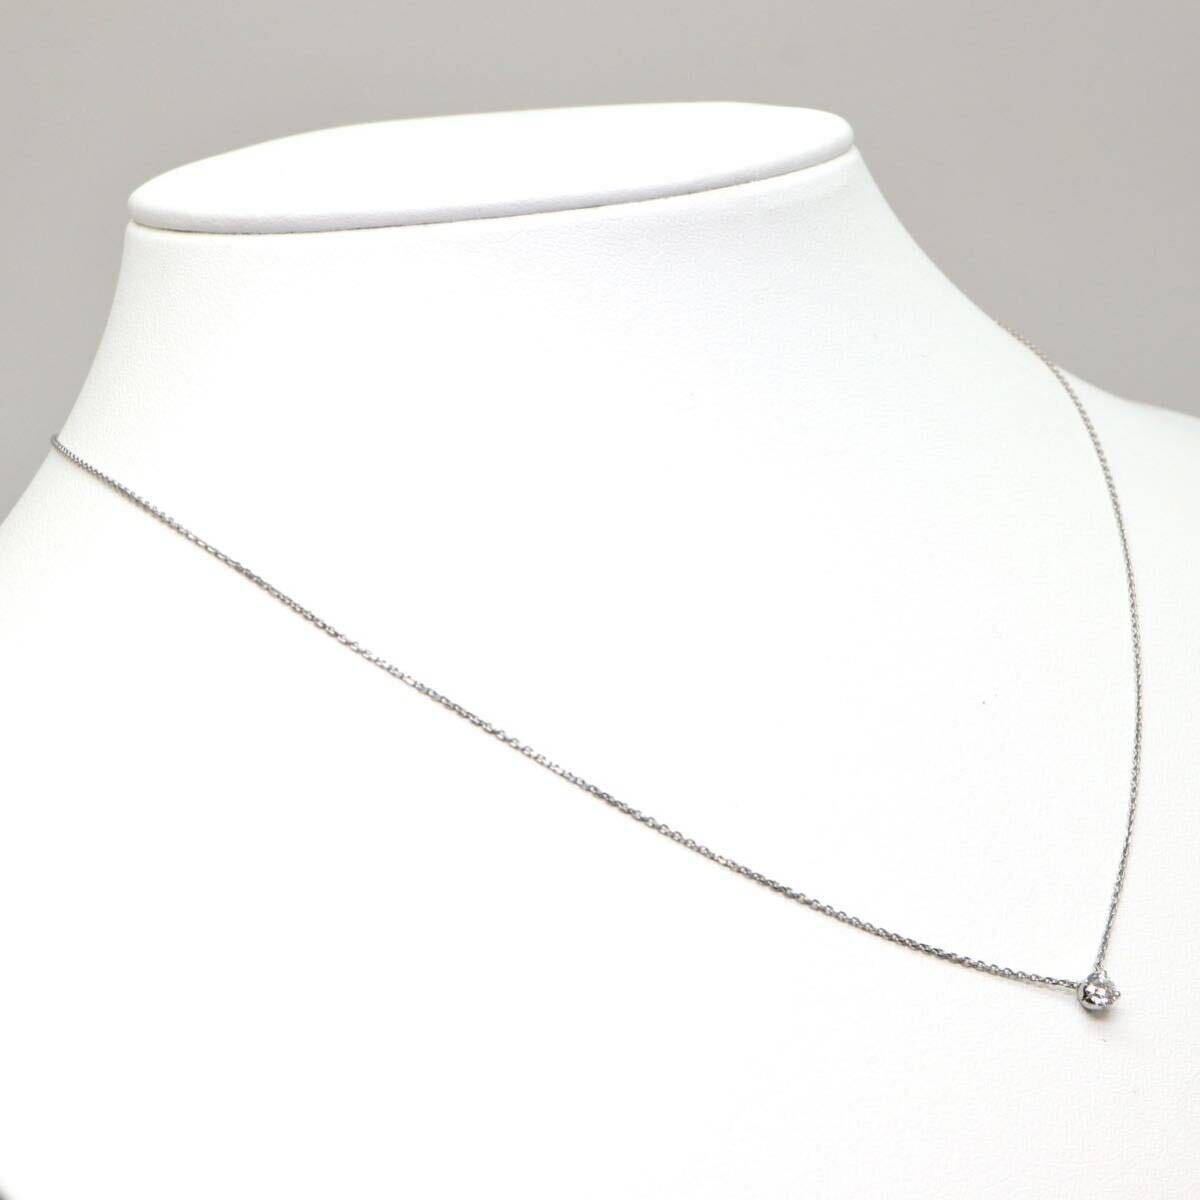  good quality!!4°C(yondosi-)*Pt850 natural diamond necklace *M approximately 1.9g approximately 43.0cm diamond necklace EA5/EB2